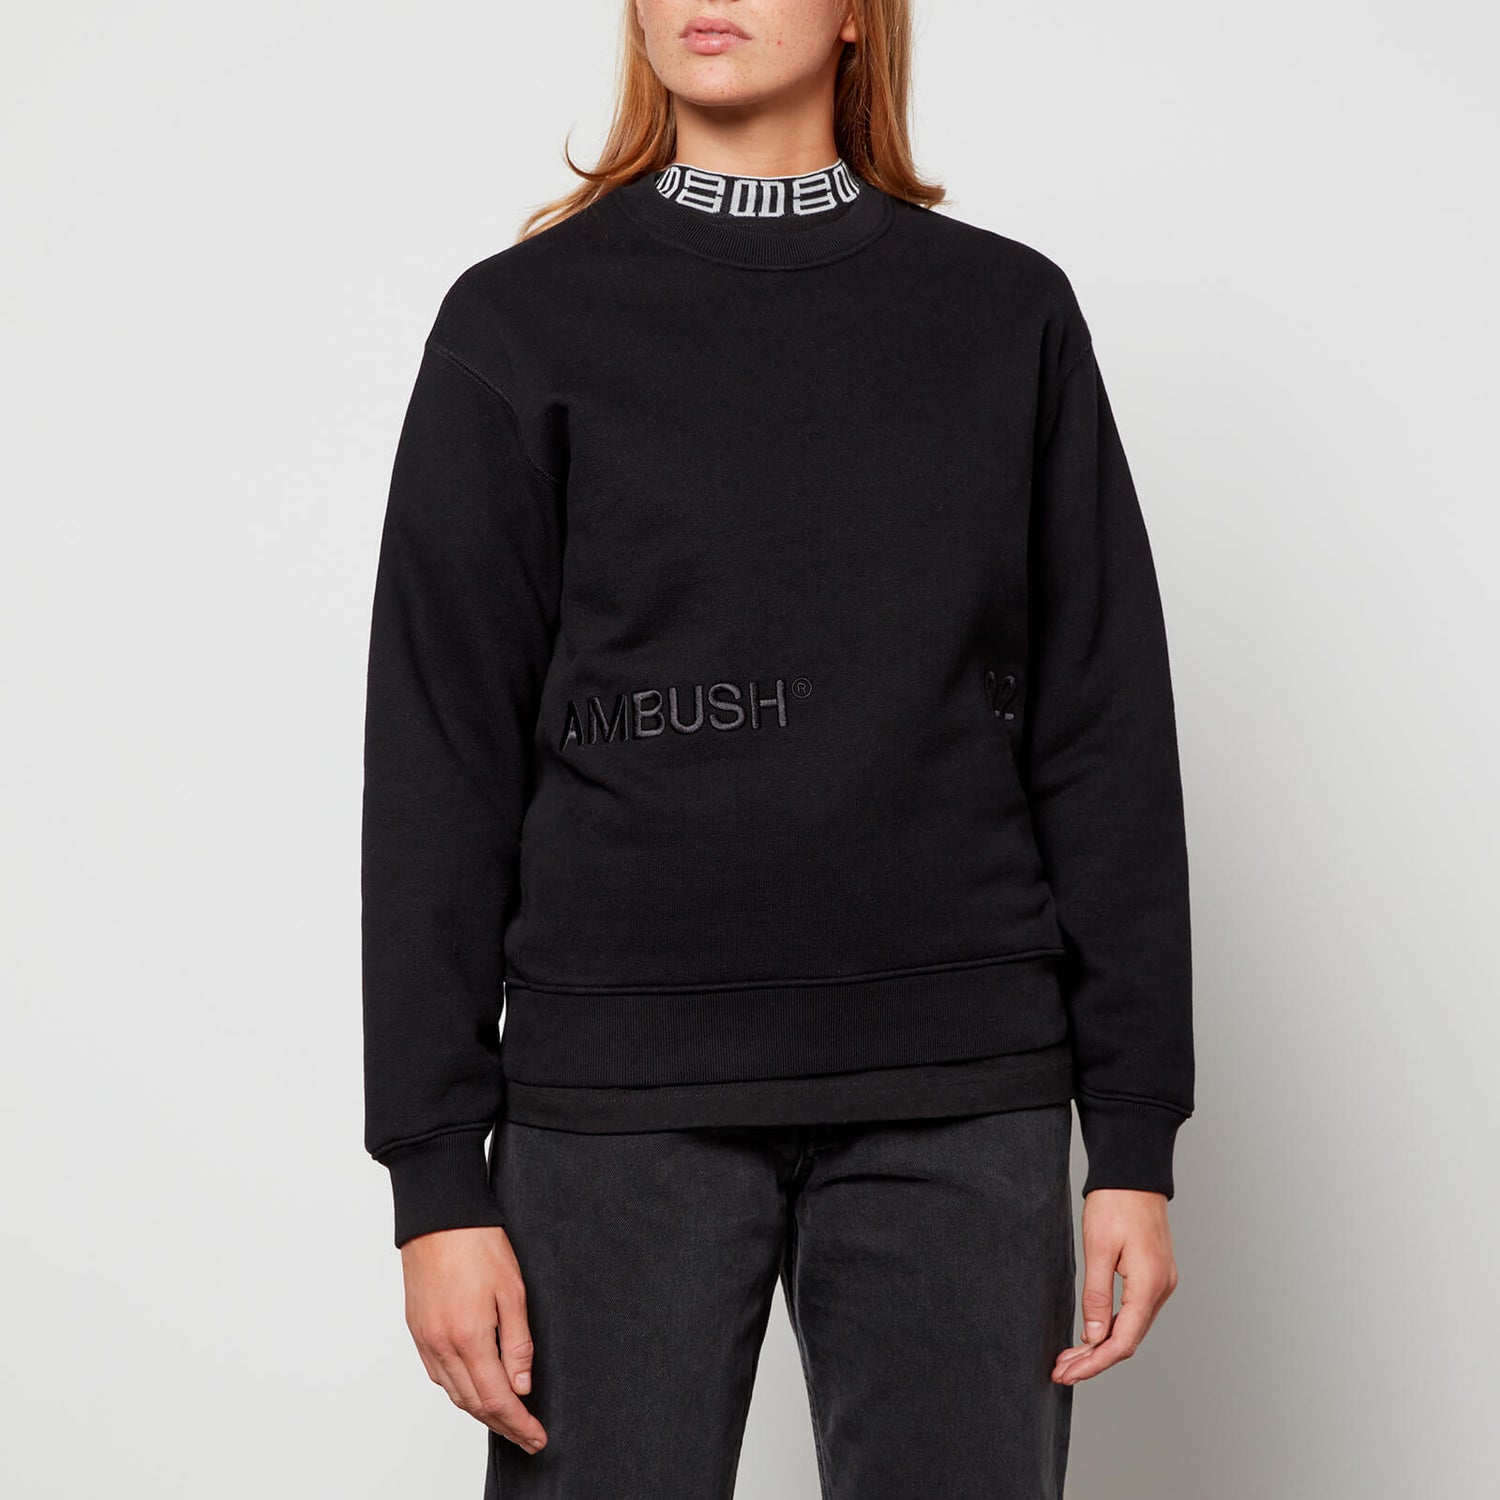 AMBUSH Women's Crewneck Sweatshirt - Black - XS